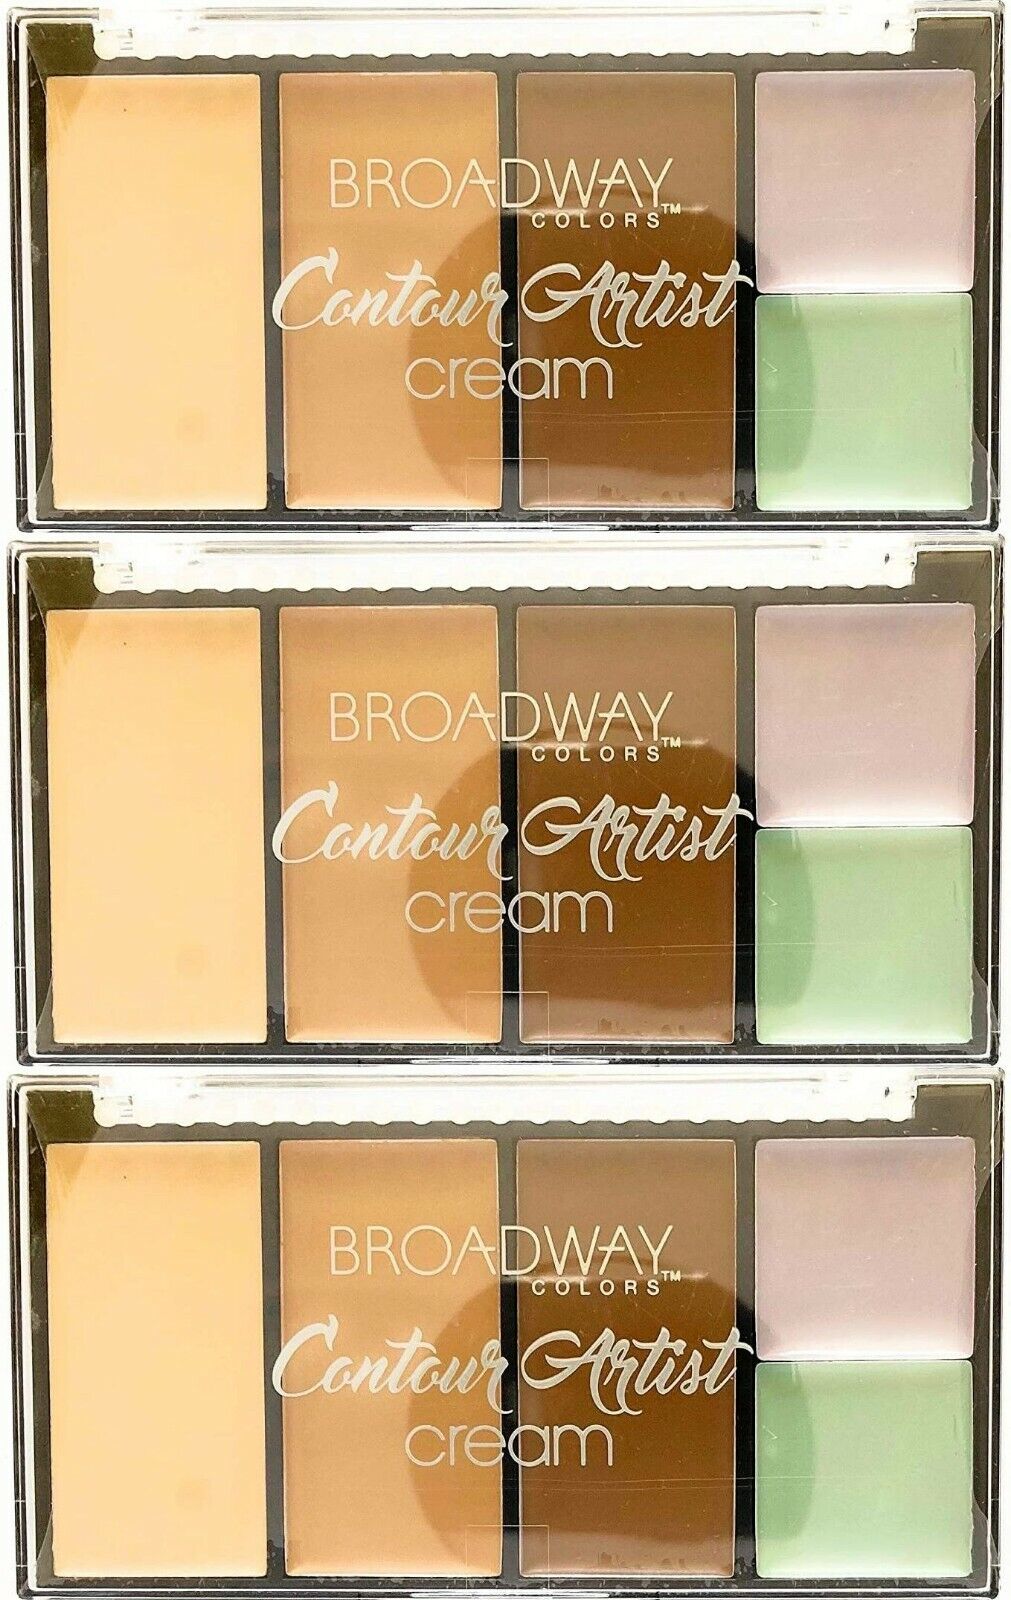 Broadway Colors (1) Contour Artist Cream - BCK01 Light/Medium set of 3